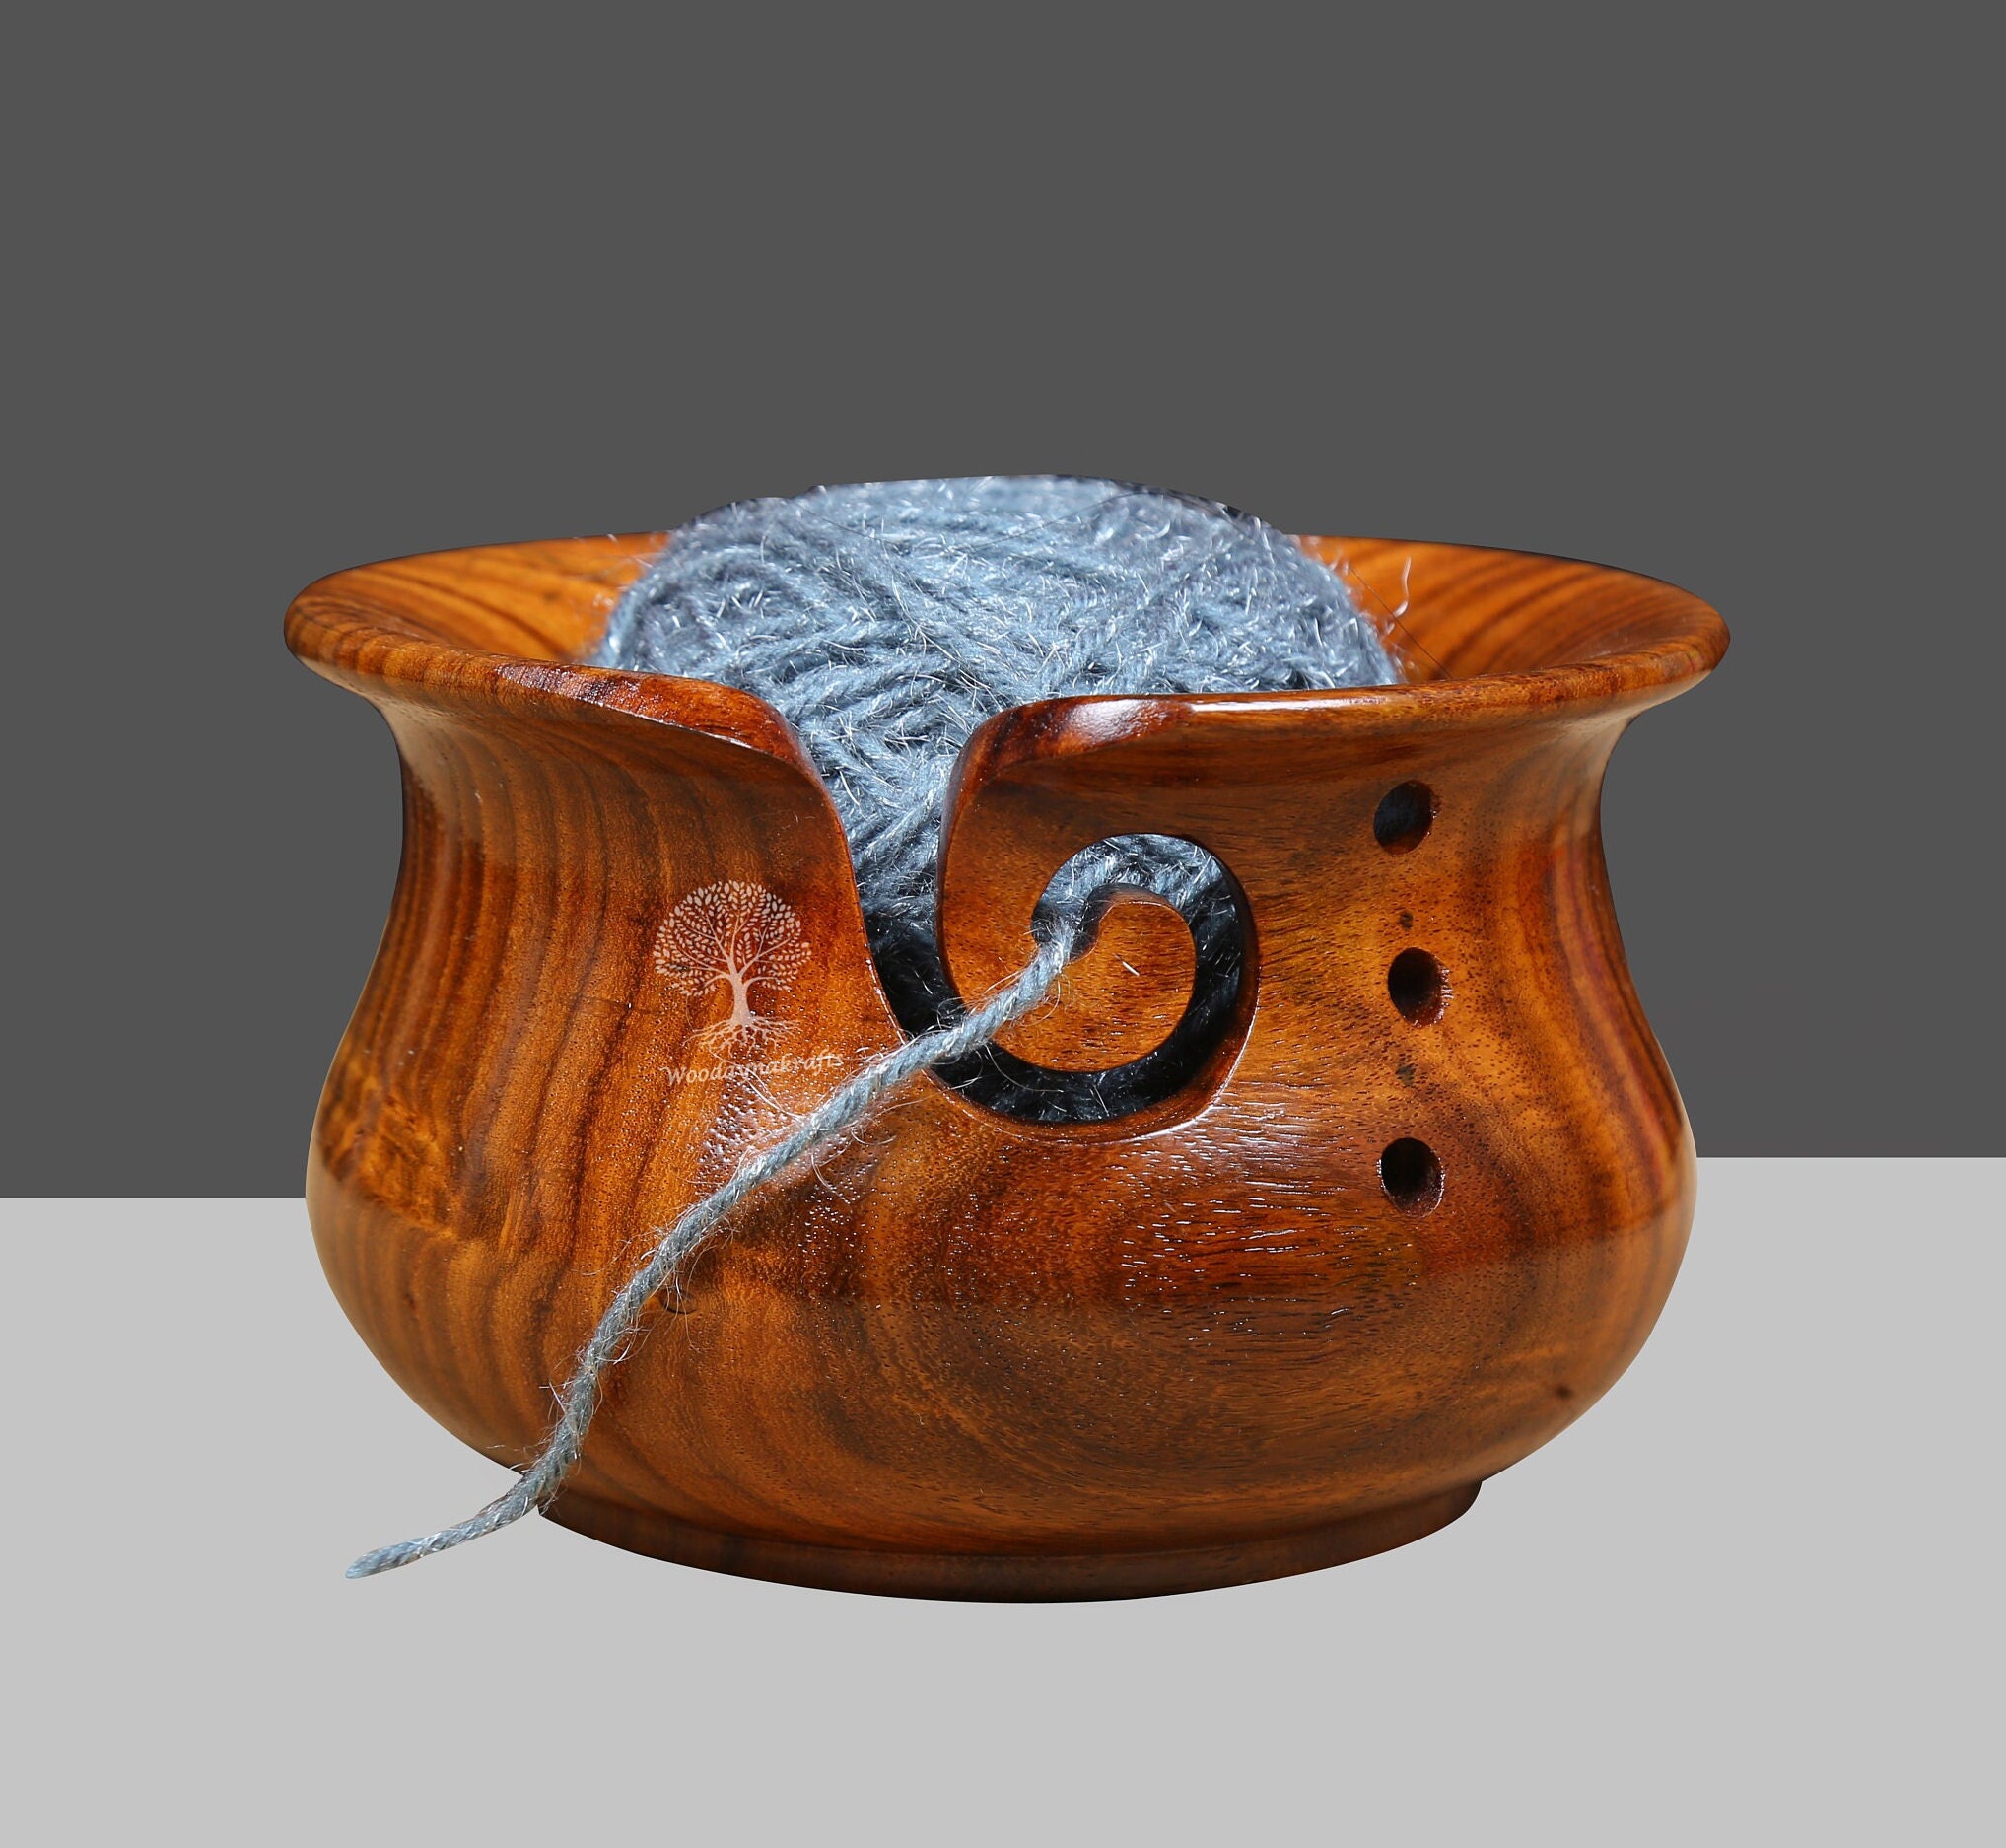 Handcrafted Yarn Bowls by NELSONWOOD